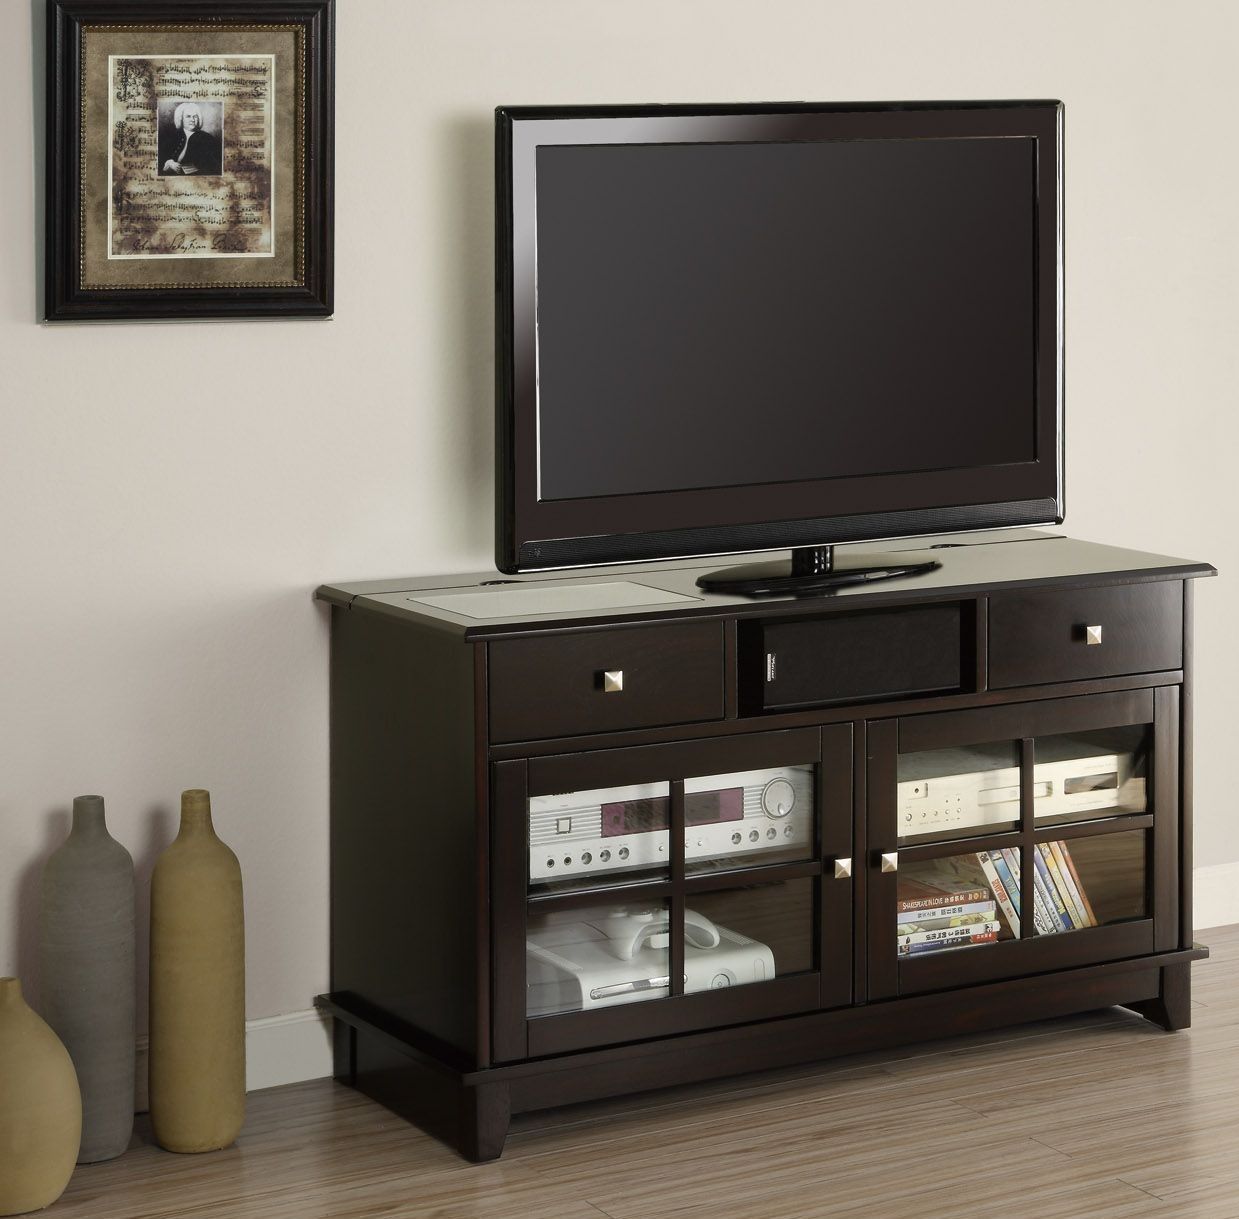 Dark Espresso Veneer Tv Stand From Monarch | Coleman Furniture Inside Expresso Tv Stands (View 6 of 15)